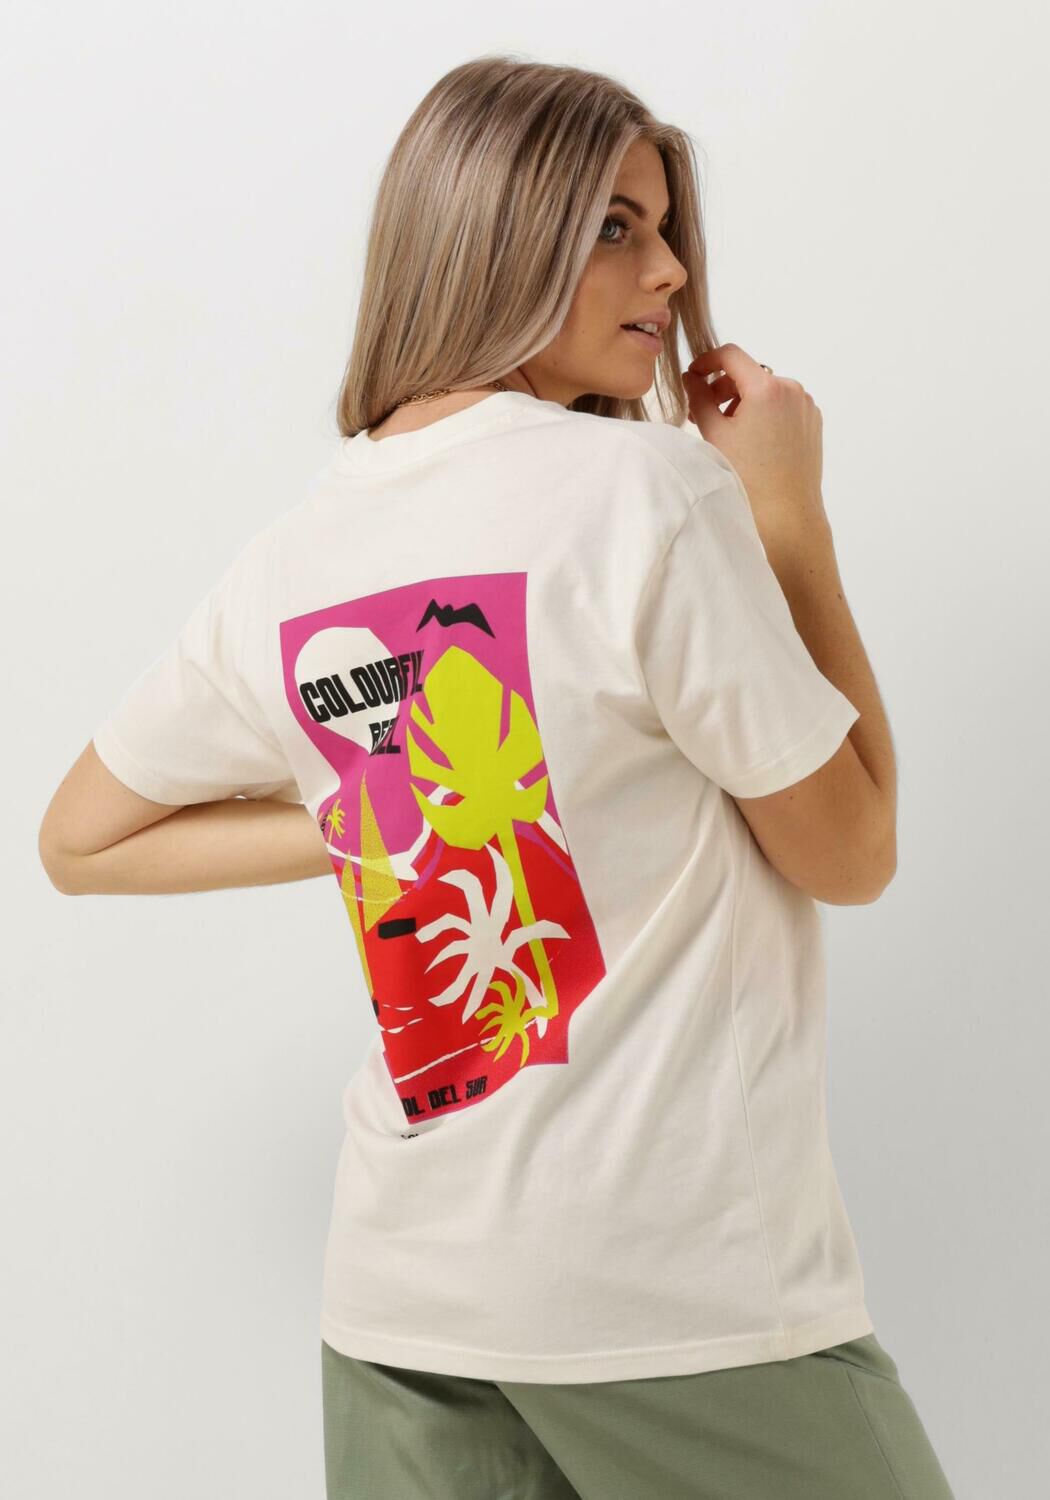 COLOURFUL REBEL Dames Tops & T-shirts Sol Der Sur Broxy Tee Wit